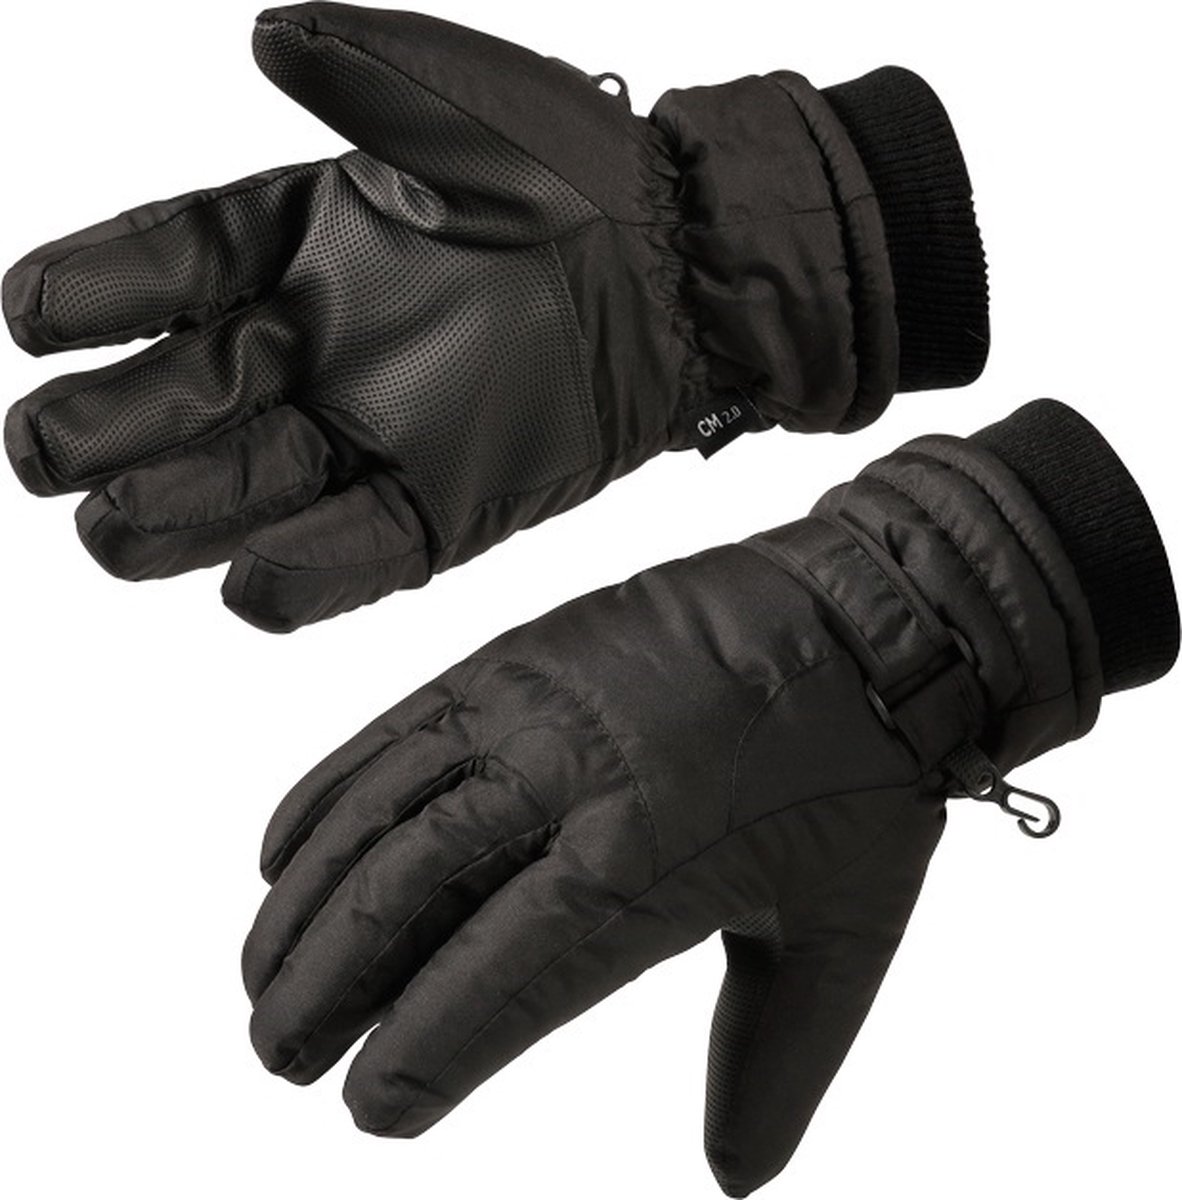 Gloves&Co Thinsulate skihandschoenen - dames pasvorm - zwart - maat M